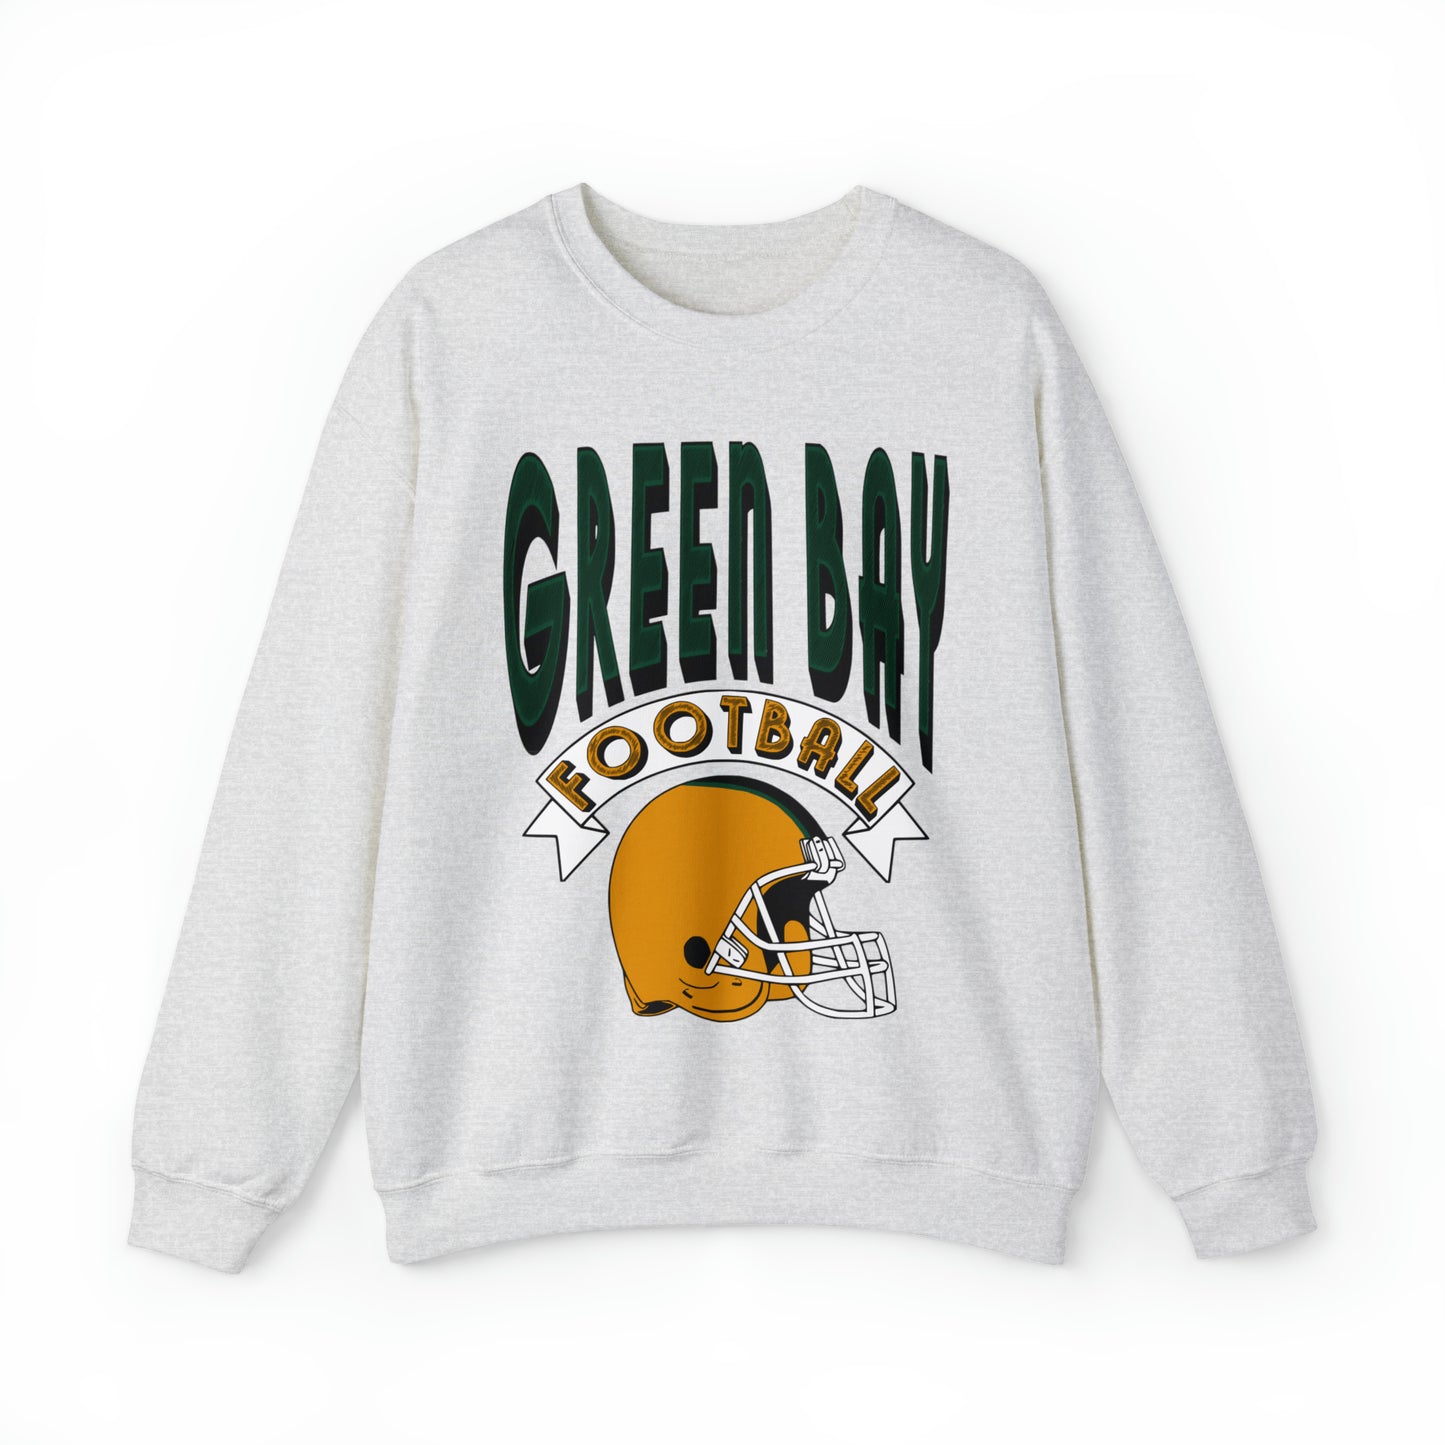 90's Green Bay Packers Sweatshirt - Vintage Style Crewneck - Wisconsin Cheese Head - Throwback Logo  - Design 3